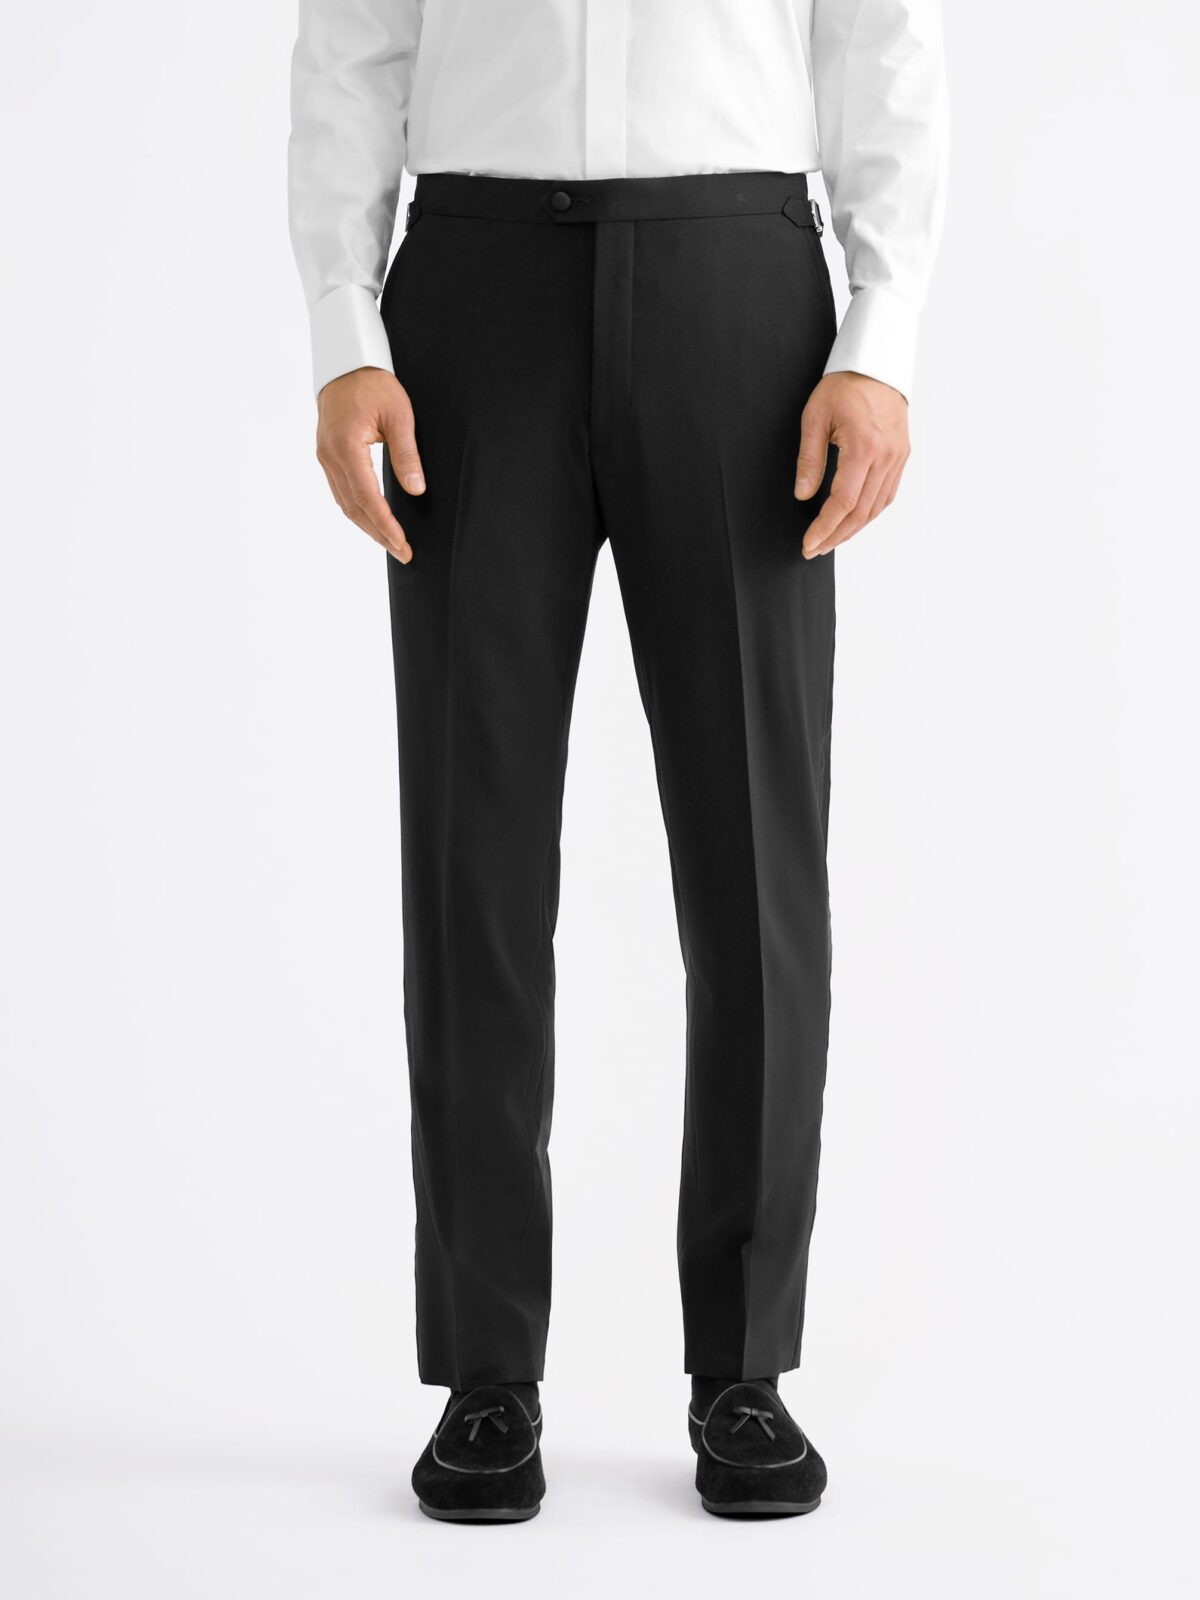 Tailored Fit Black Tuxedo Pants